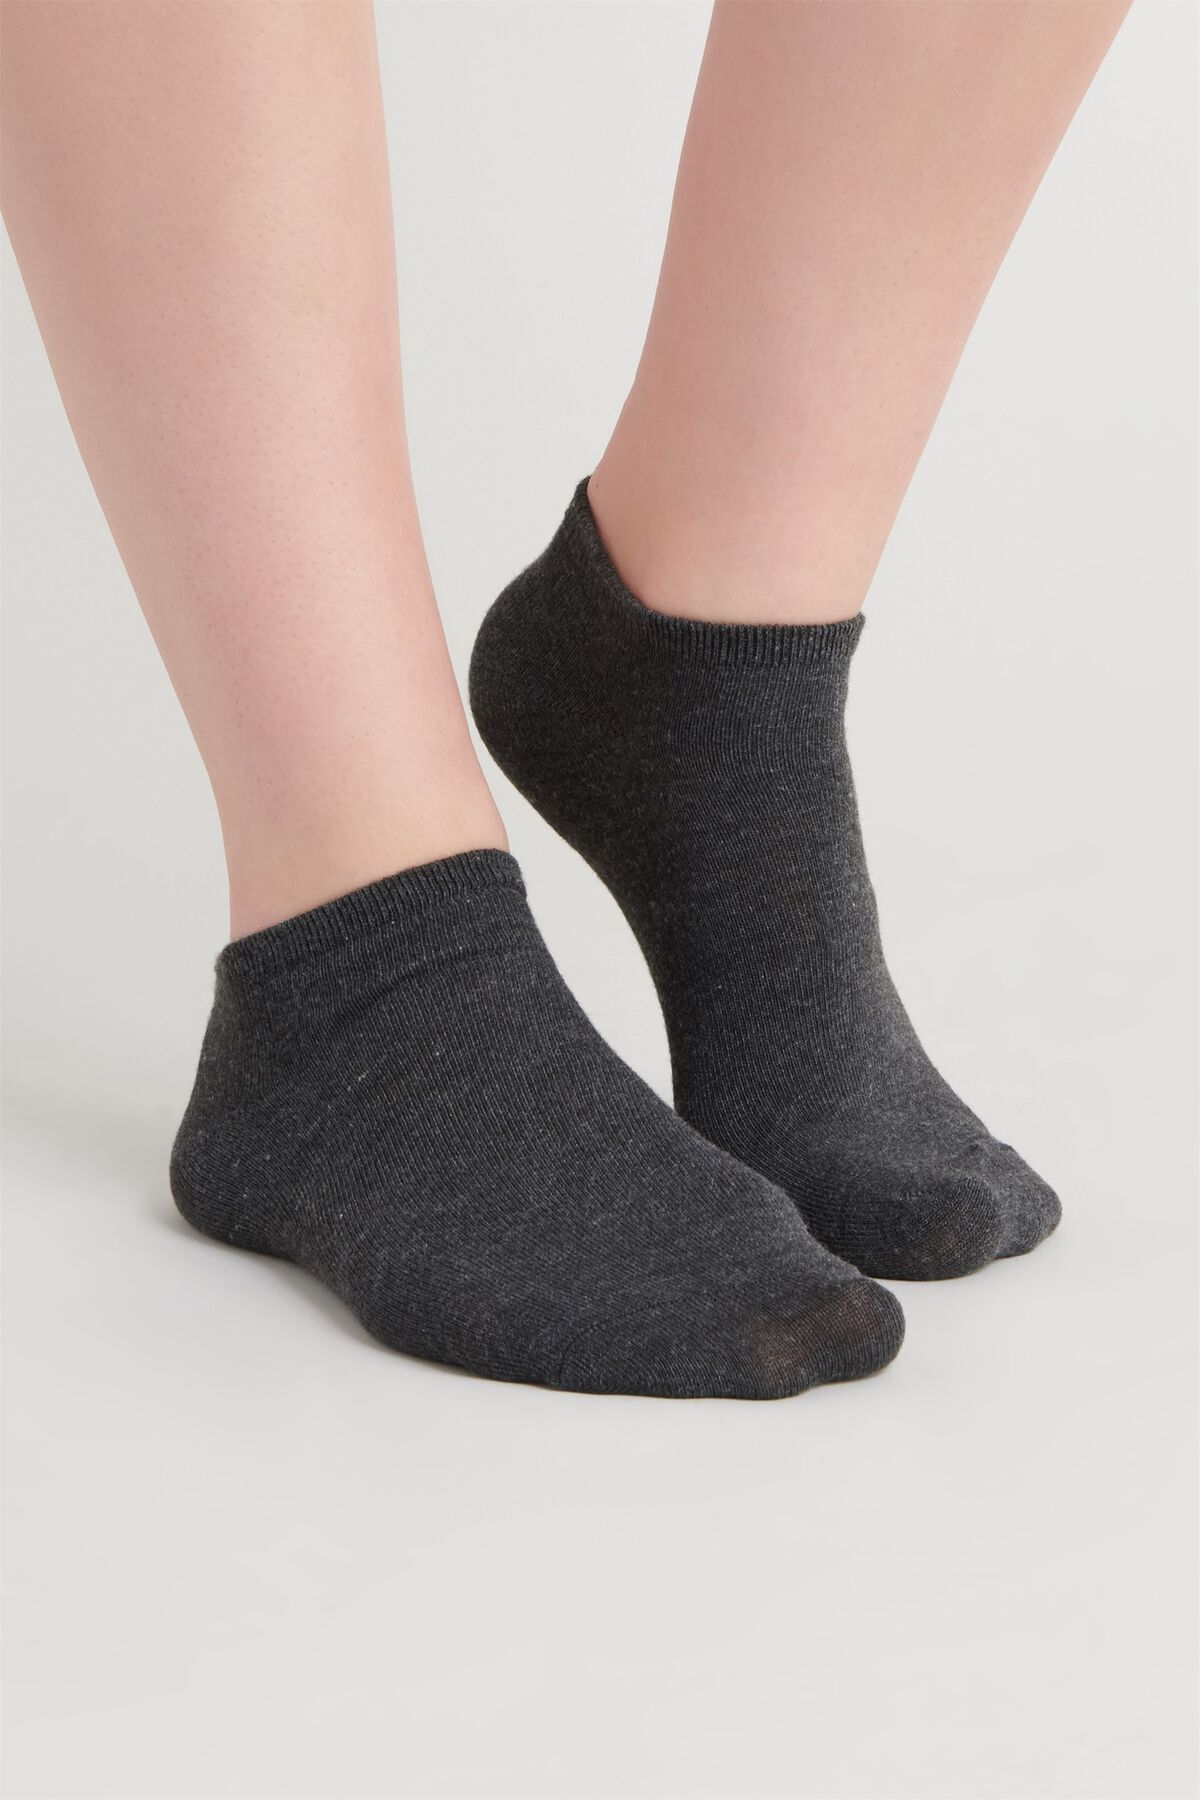 Dynamite Anklet Socks. 1